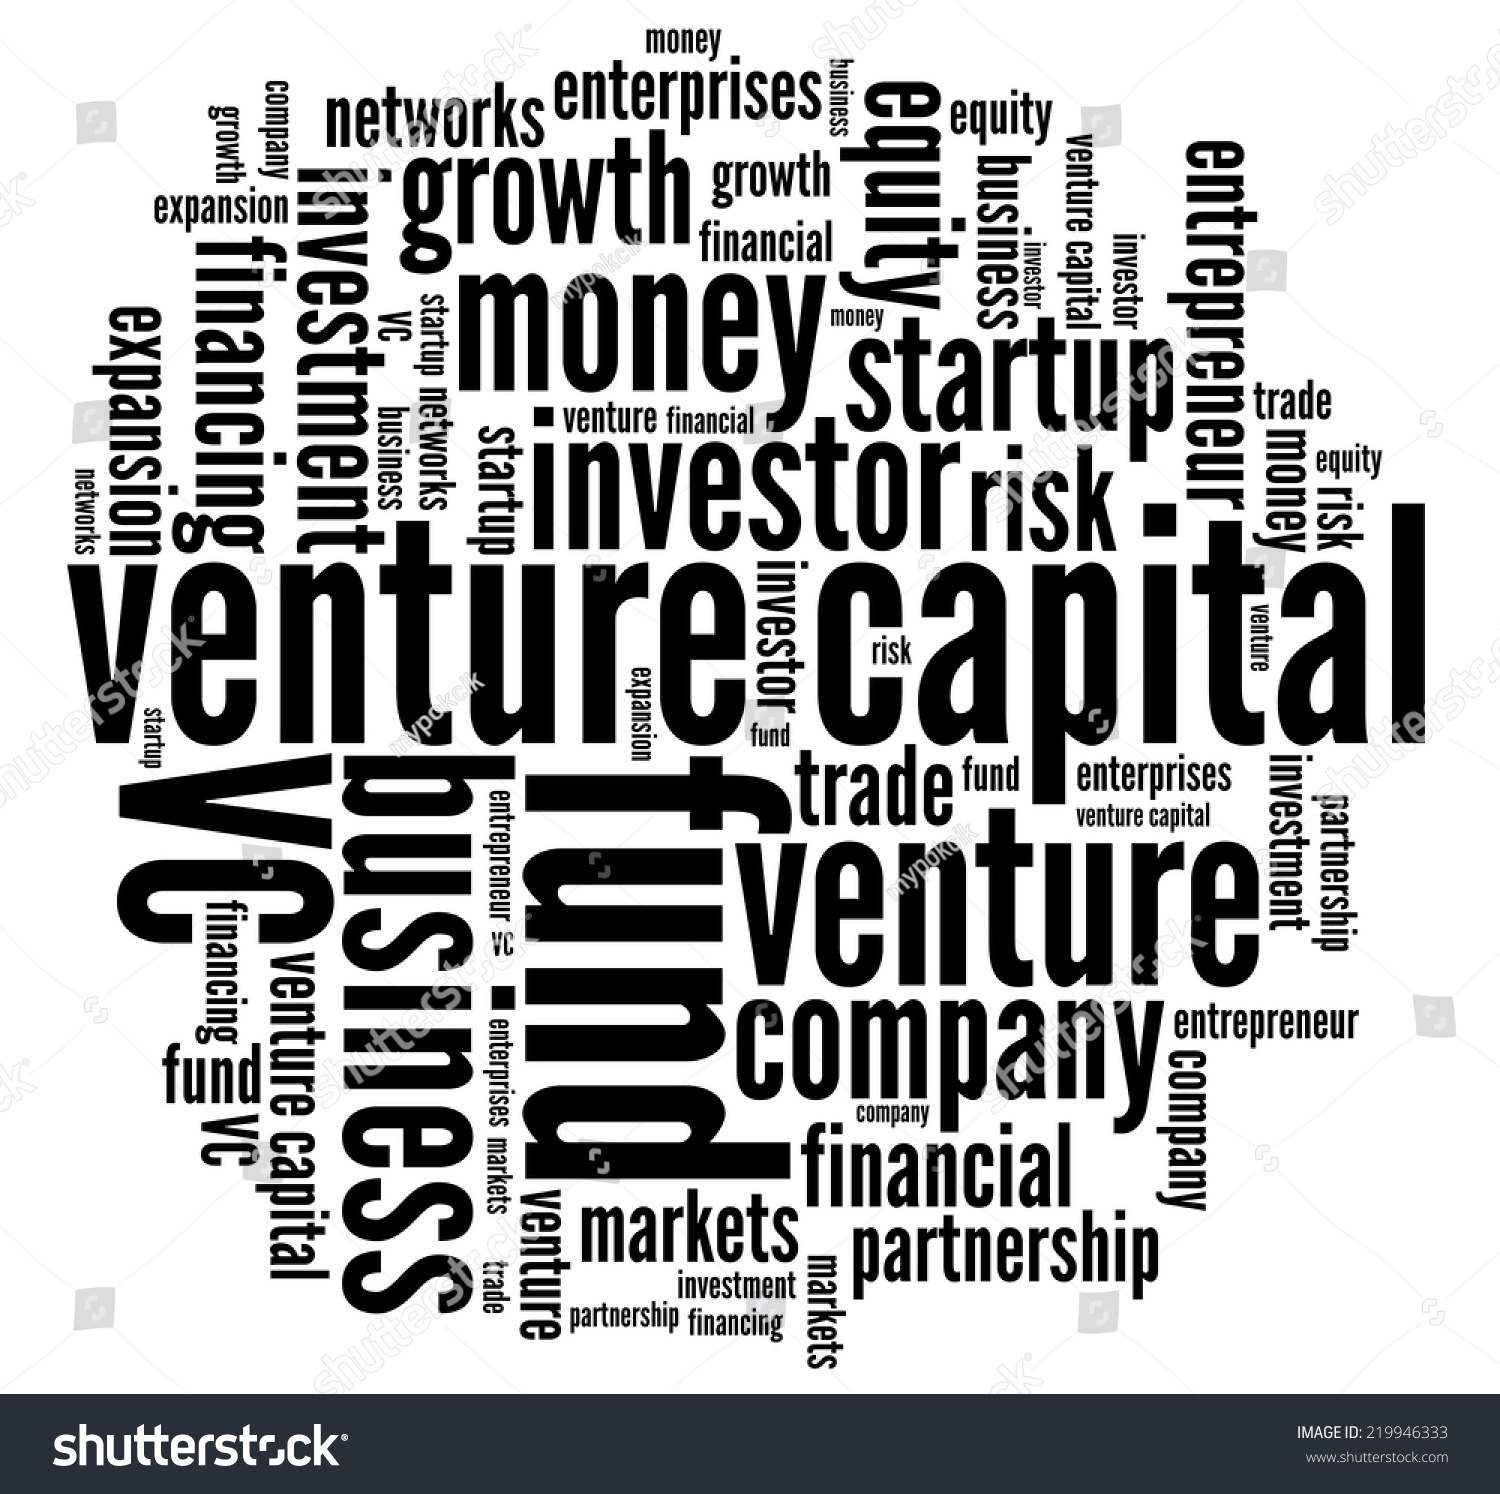 venture-capital-word-collage-stock-illustration-219946333-shutterstock